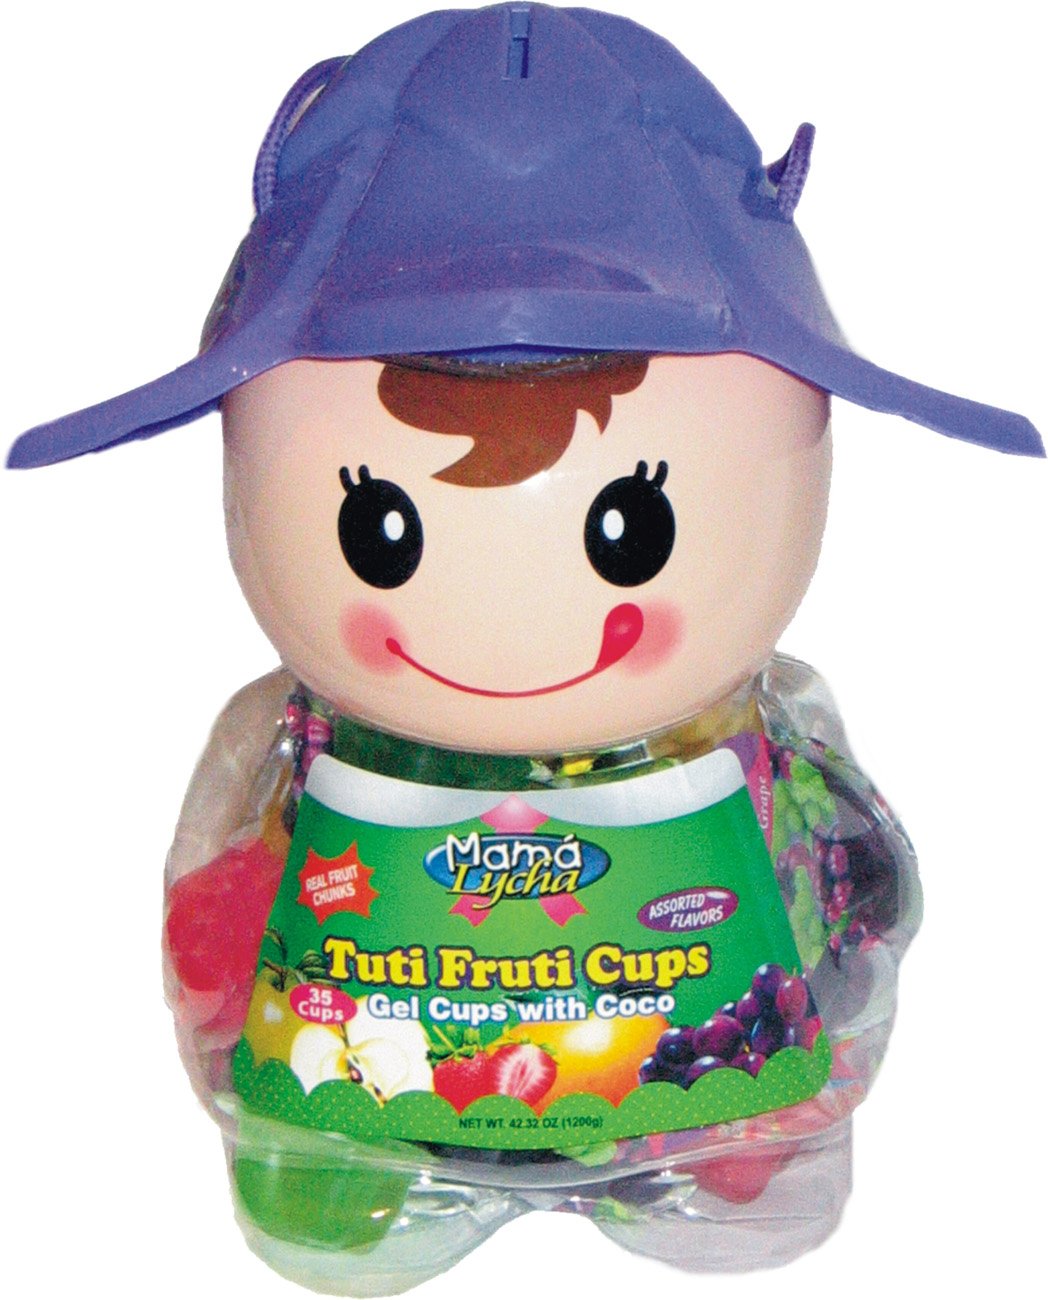 Mama Lycha Tuti Fruti Cups, Purple - Assorted Flavors Included - Shop  Pudding & Gelatin at H-E-B